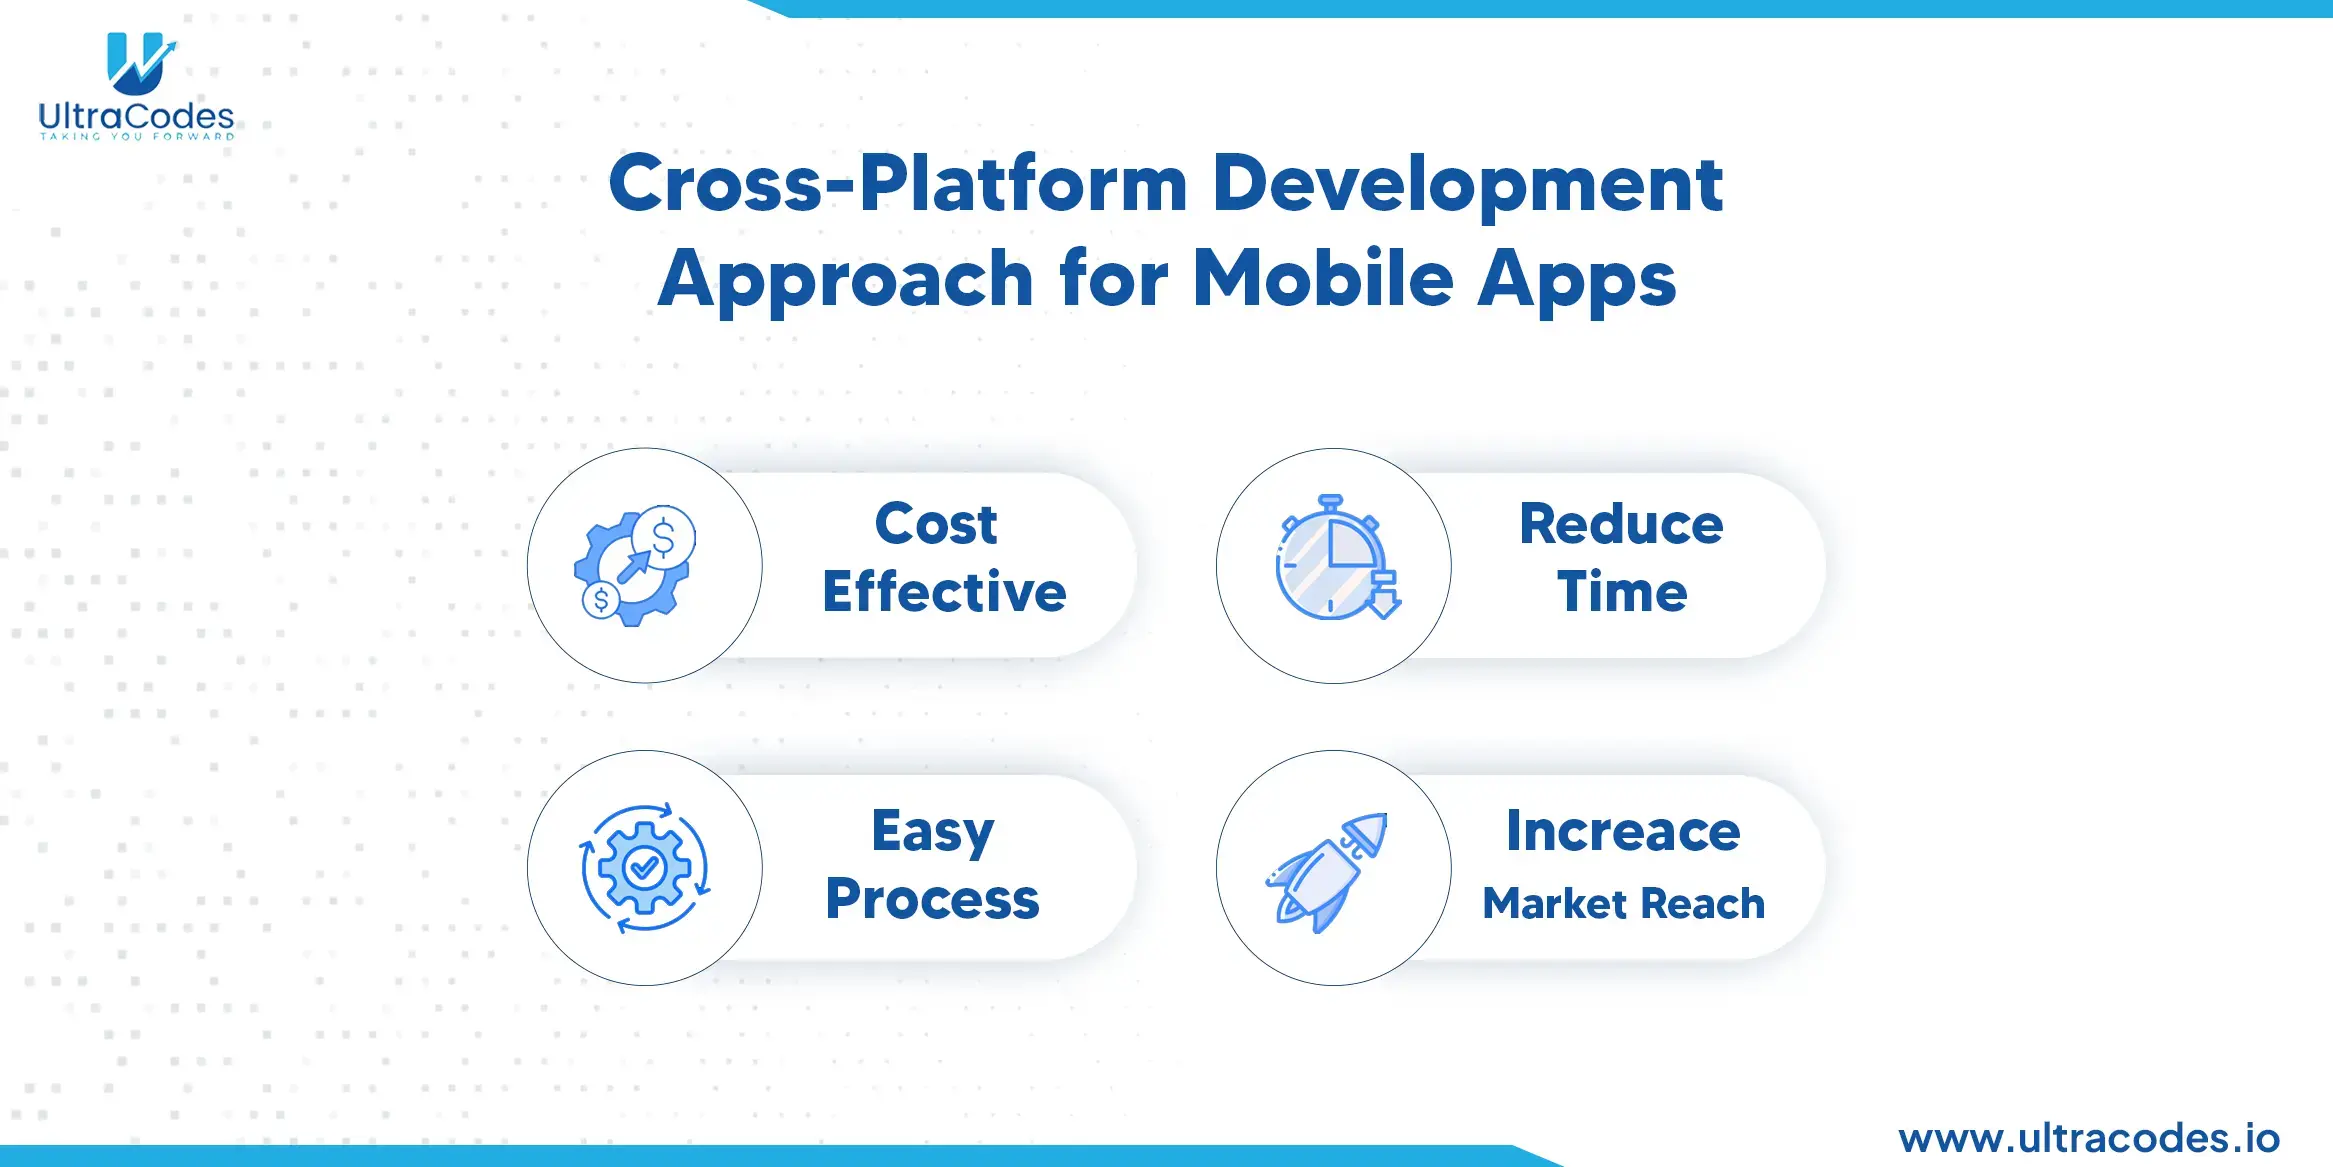 Cross-platform app benefits